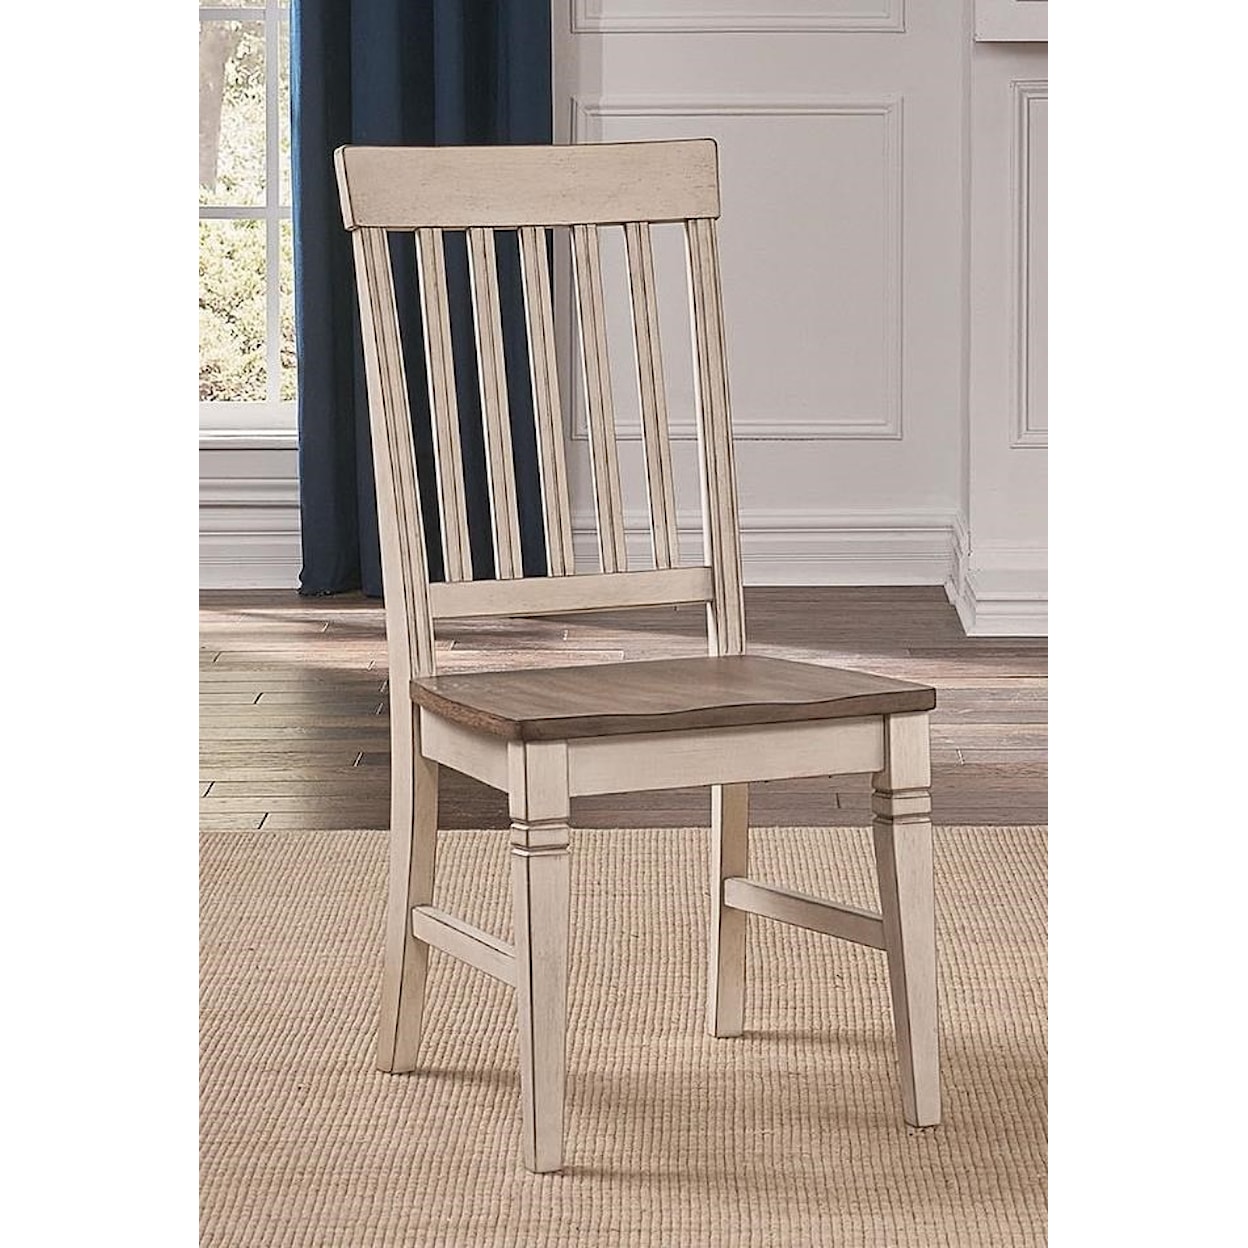 AAmerica Beacon Slatback Side Chair